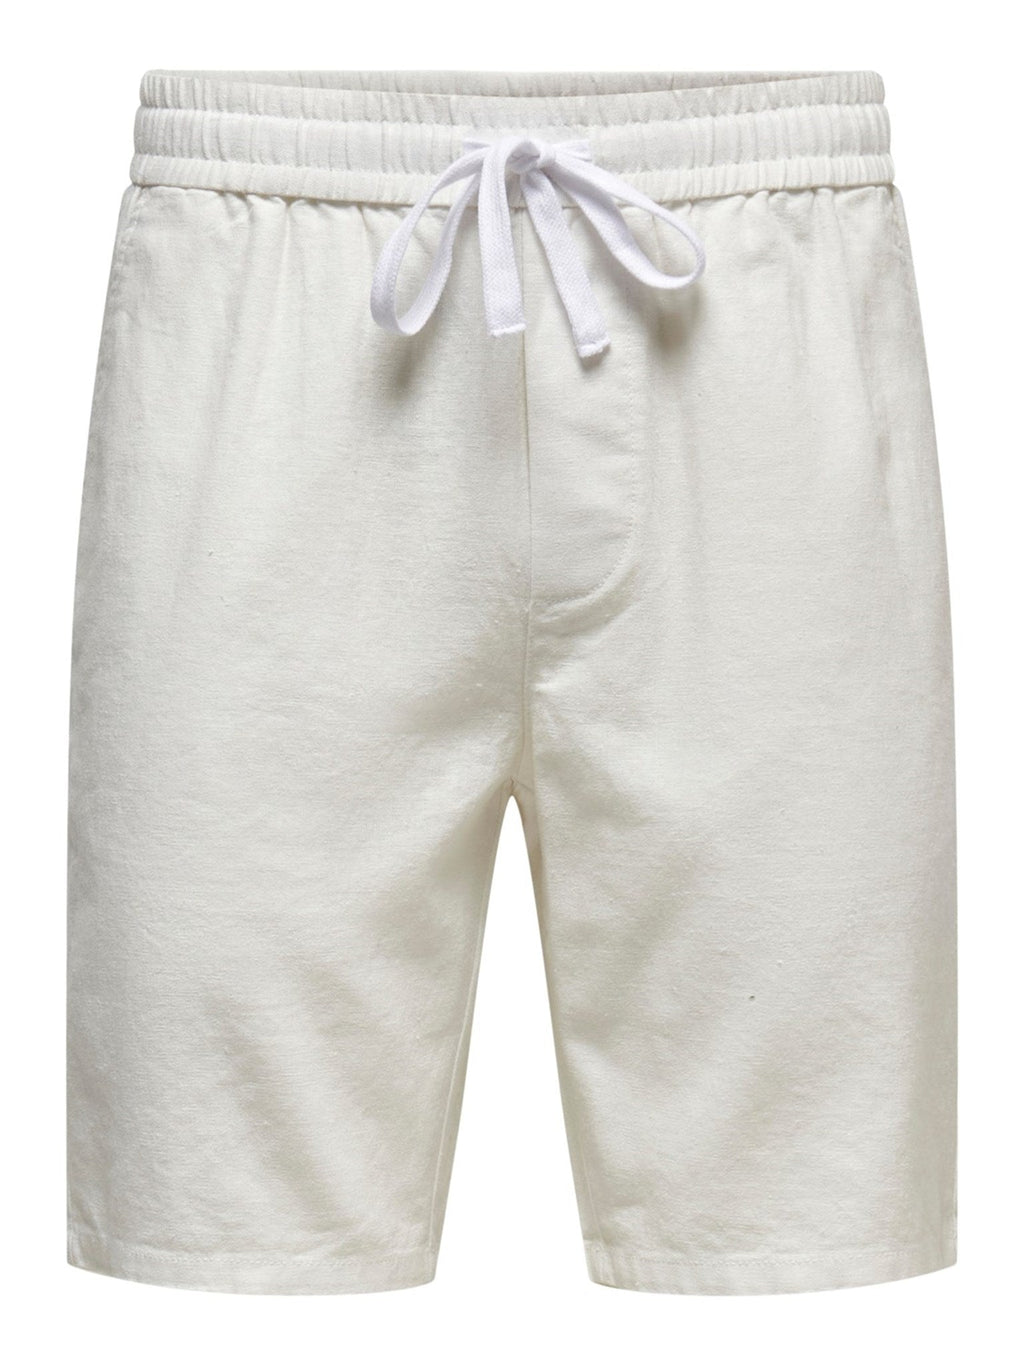 Linus linnen shorts - helder wit